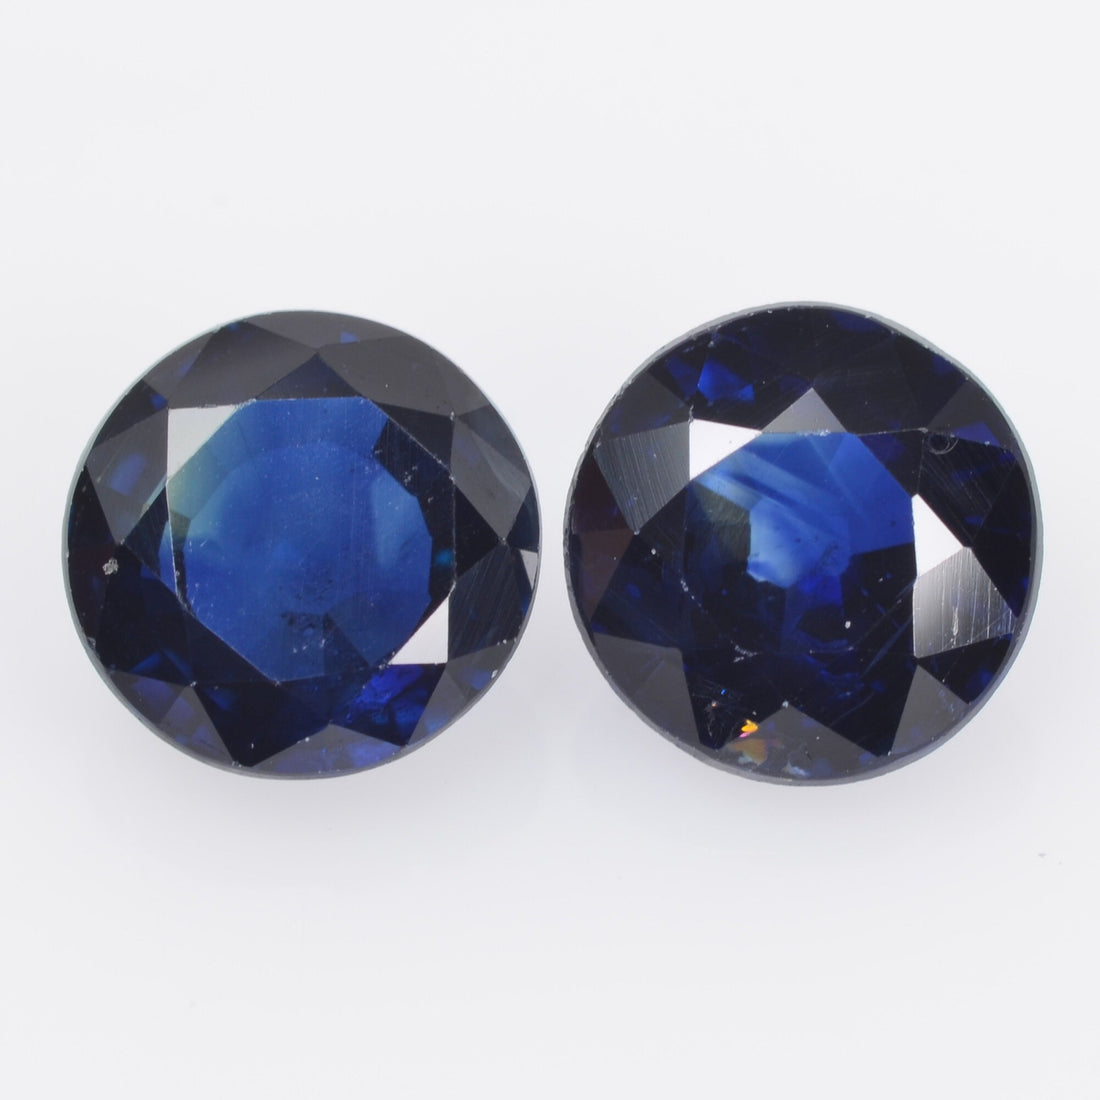 5.2-5.8 MM Natural Blue Sapphire Loose Gemstone Round Cut